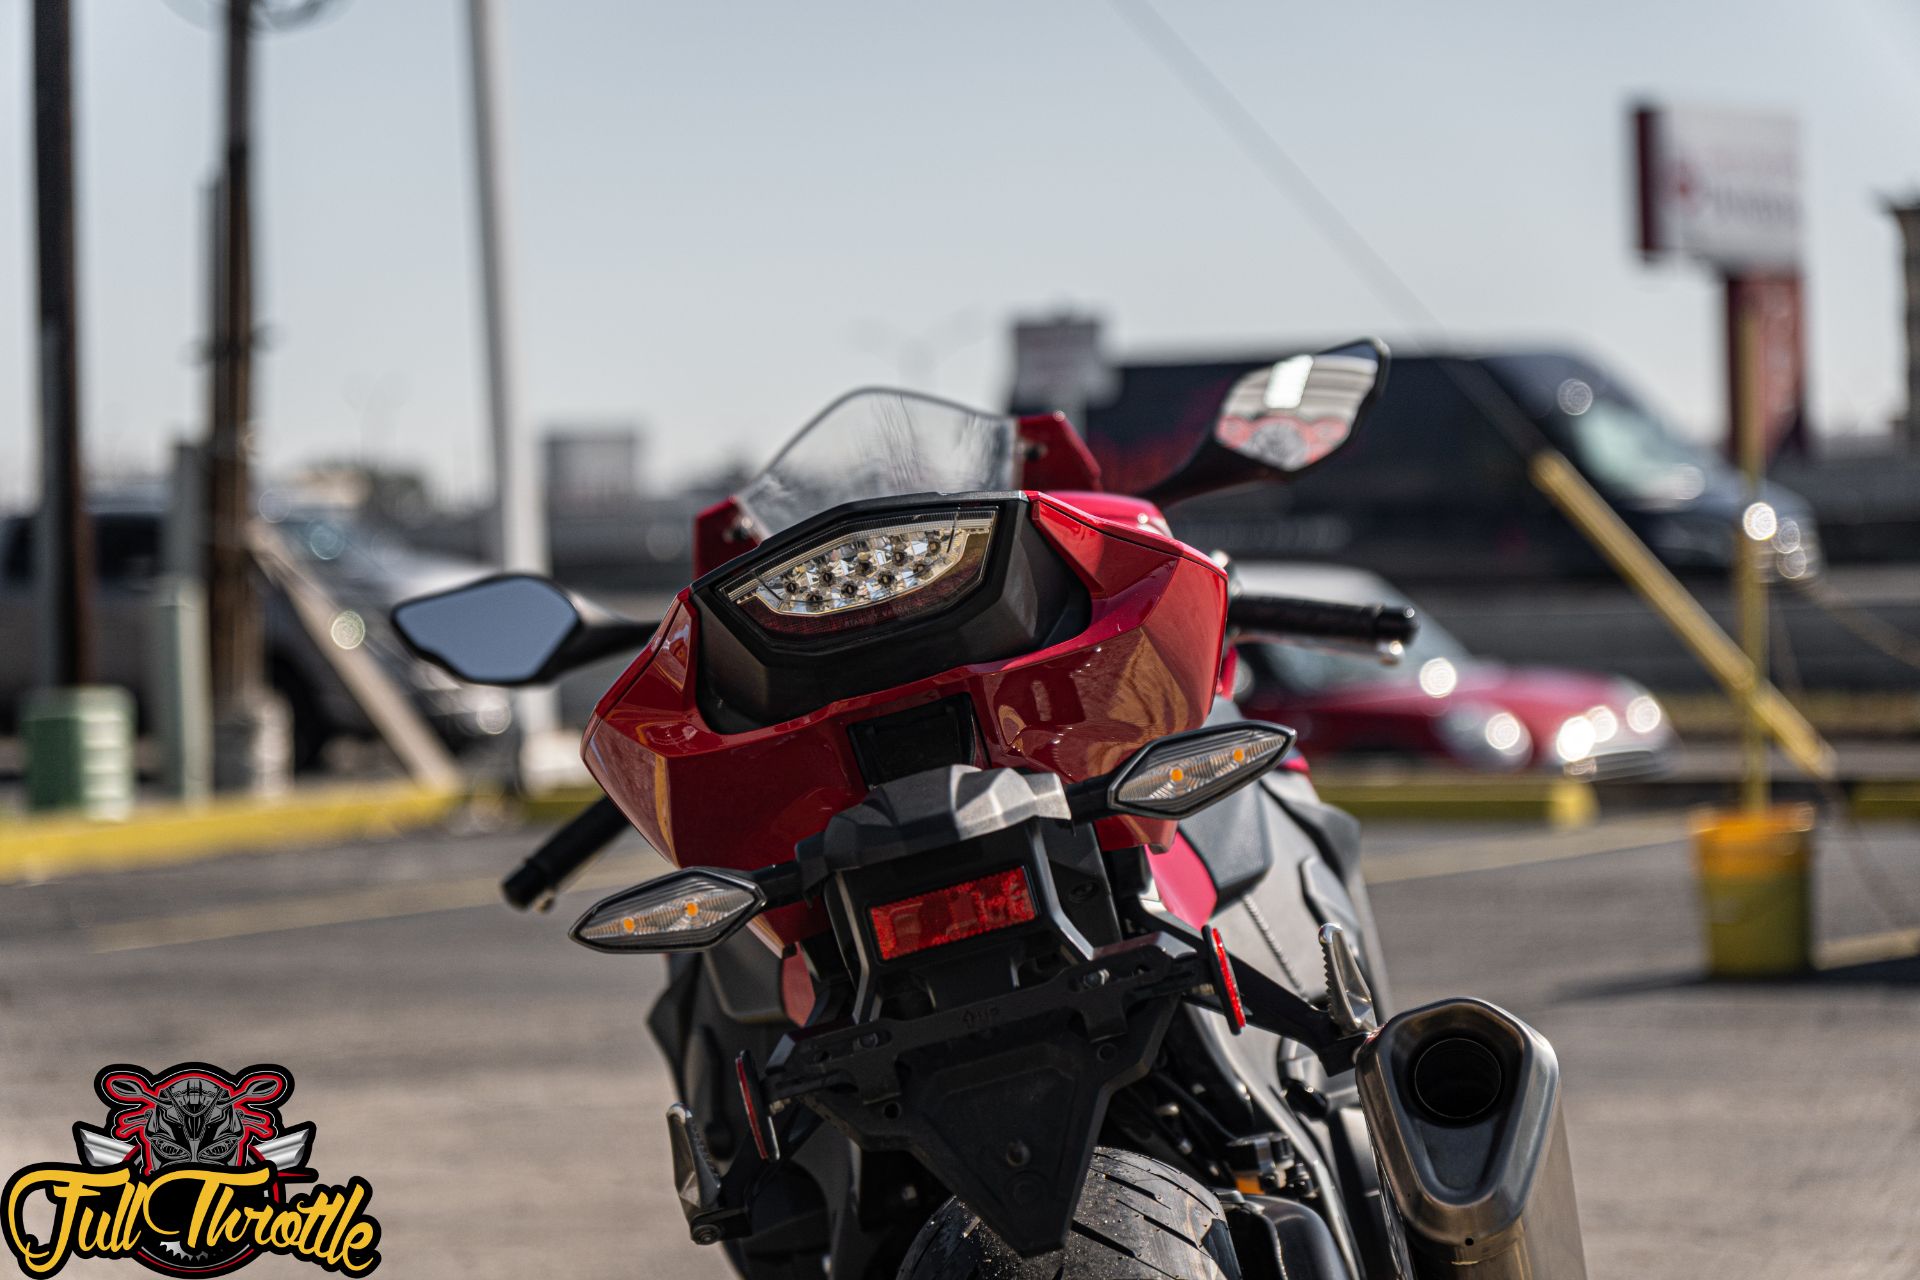 2018 Honda CBR1000RR in Houston, Texas - Photo 5